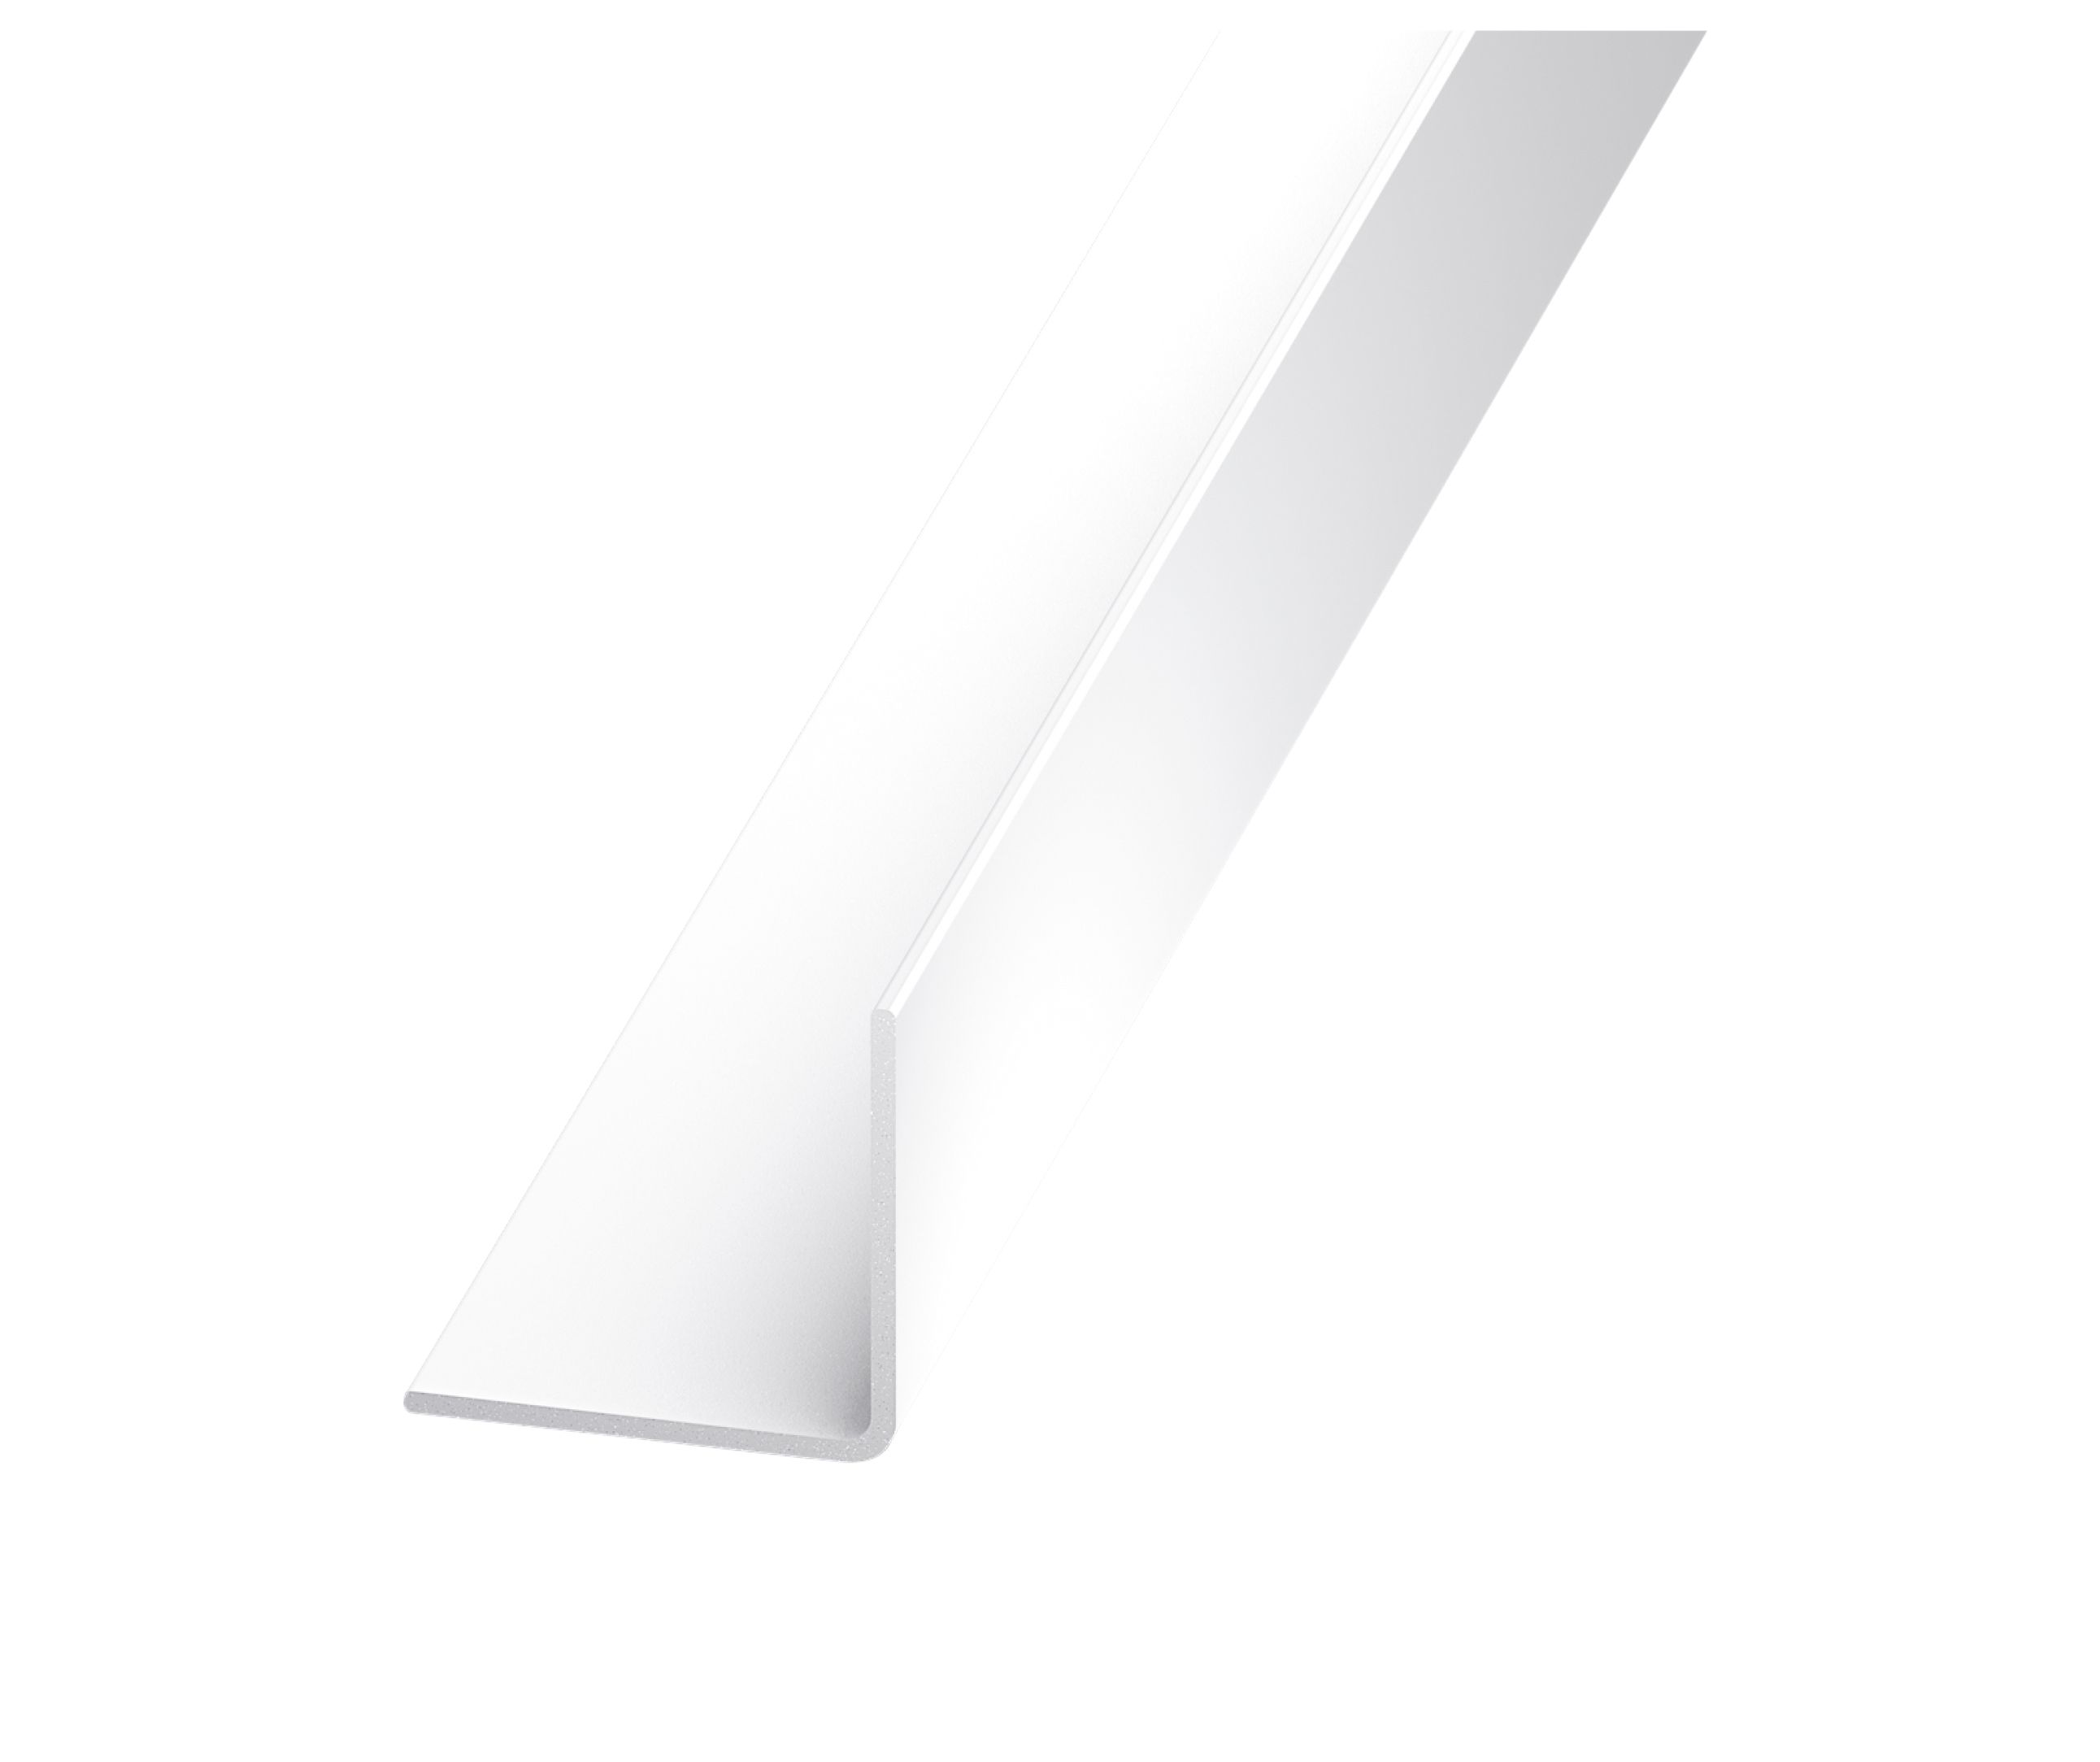 CQFD White Polyvinyl chloride (PVC) Equal L-shaped Angle profile, (L)2.5m (W)15mm (T)1mm